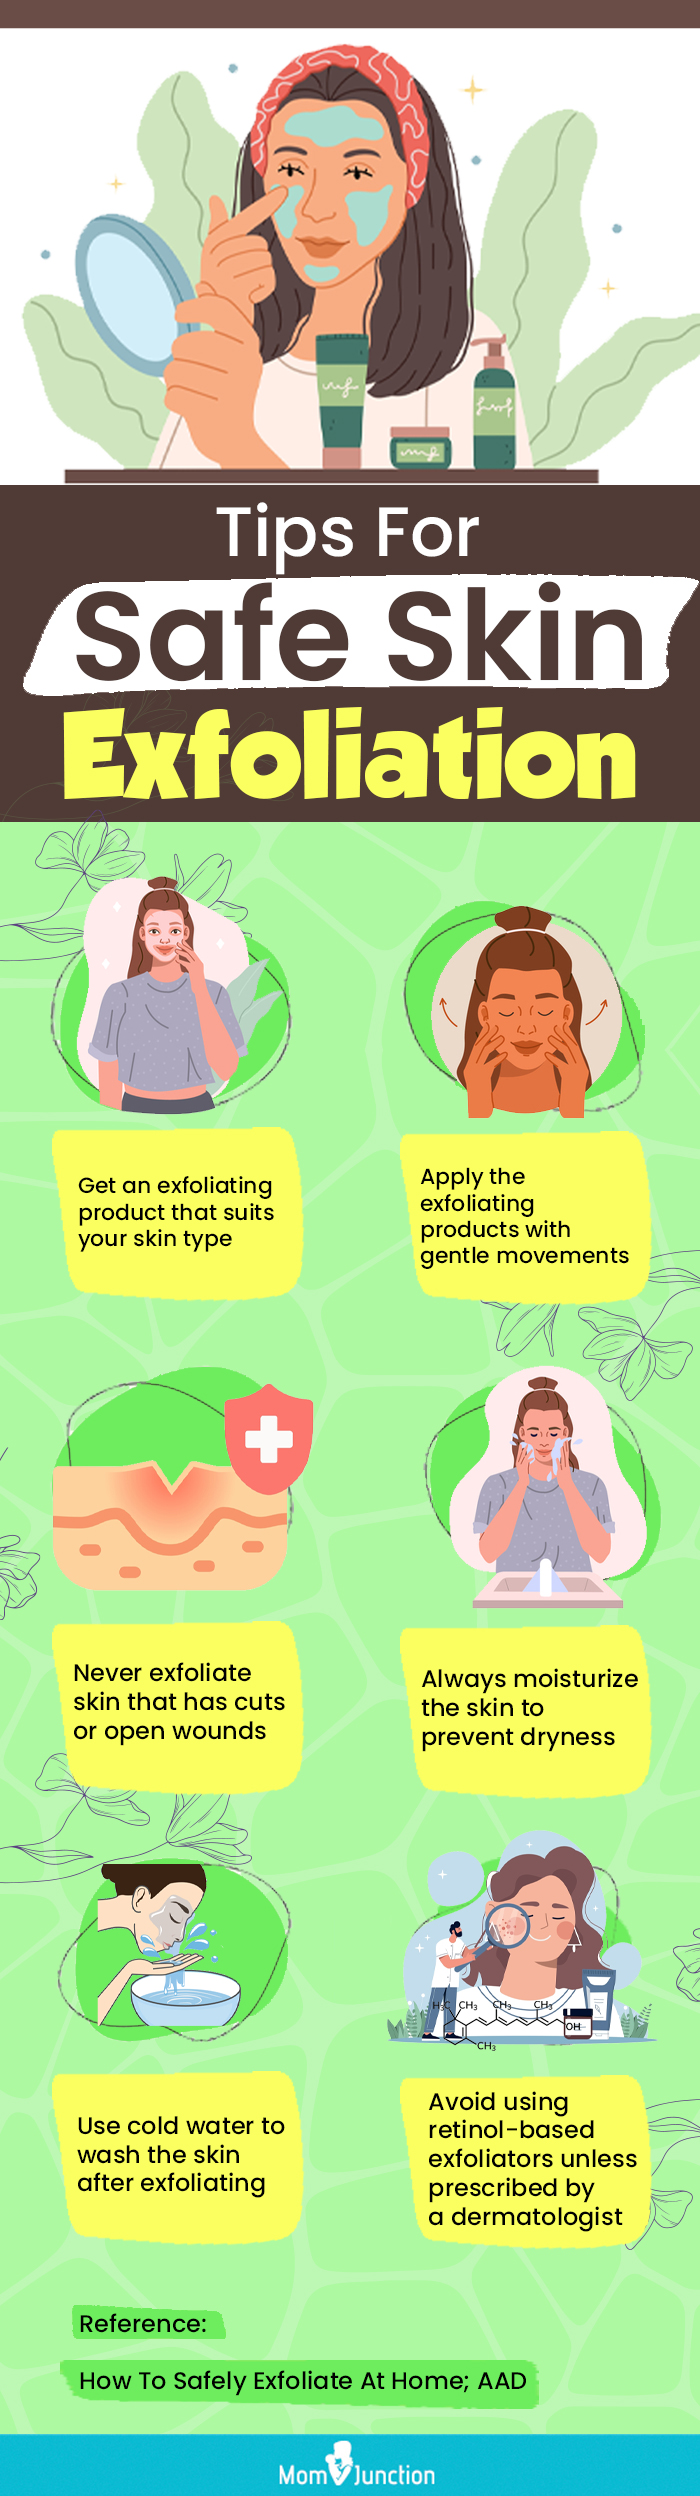 Tips For Safe Skin Exfoliation (infographic)